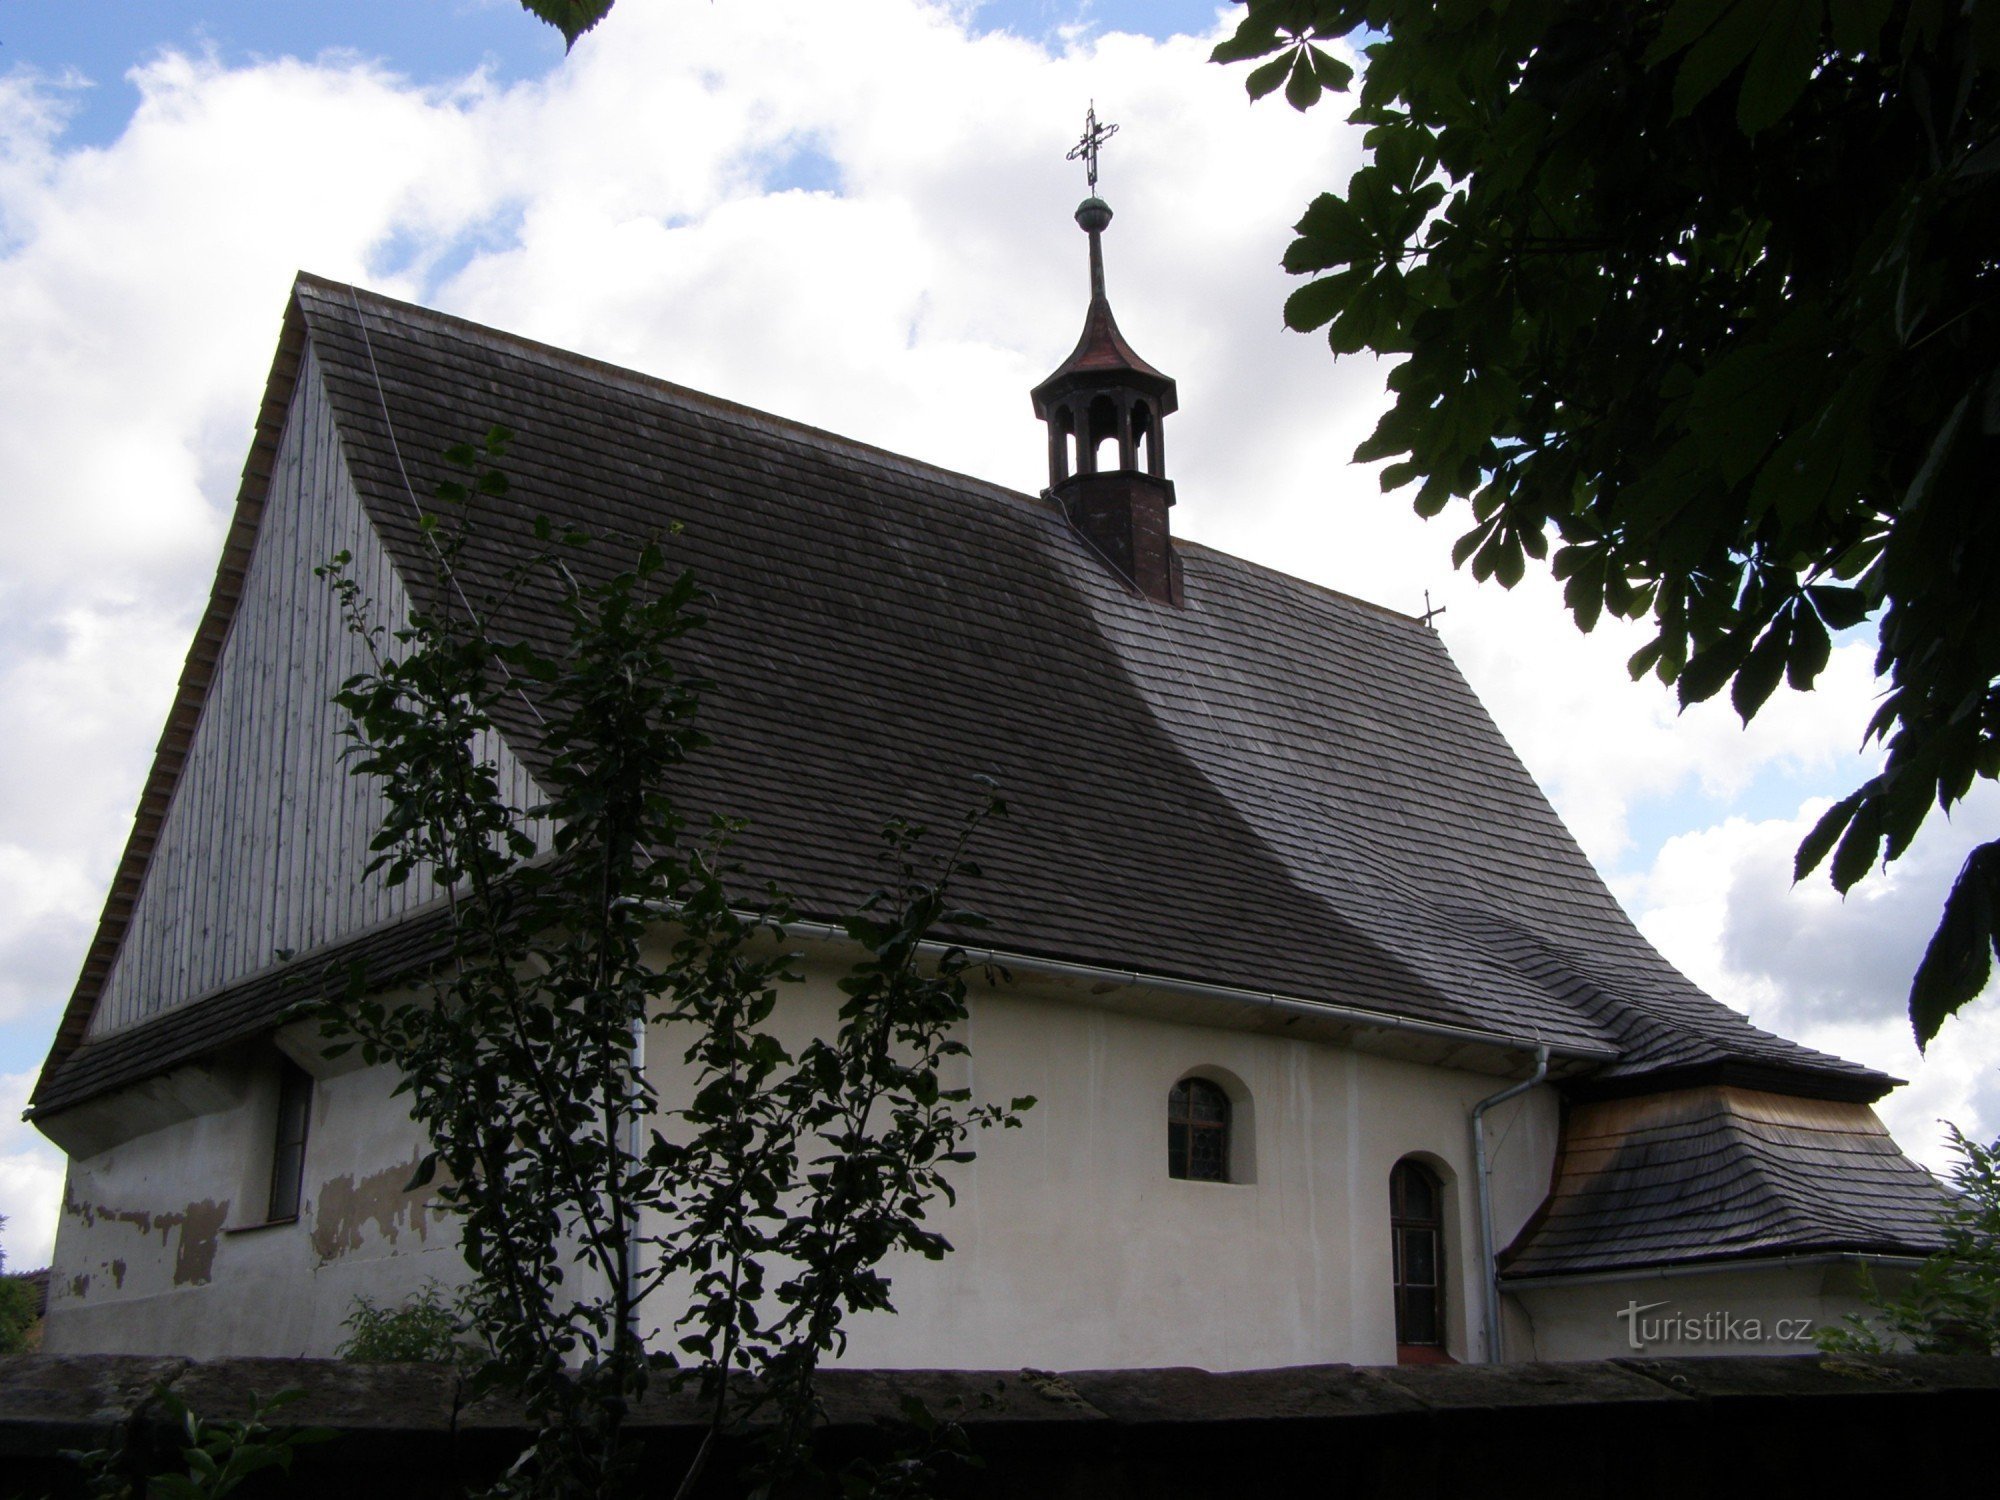 Vysočany - Holzkirche St. Märkte